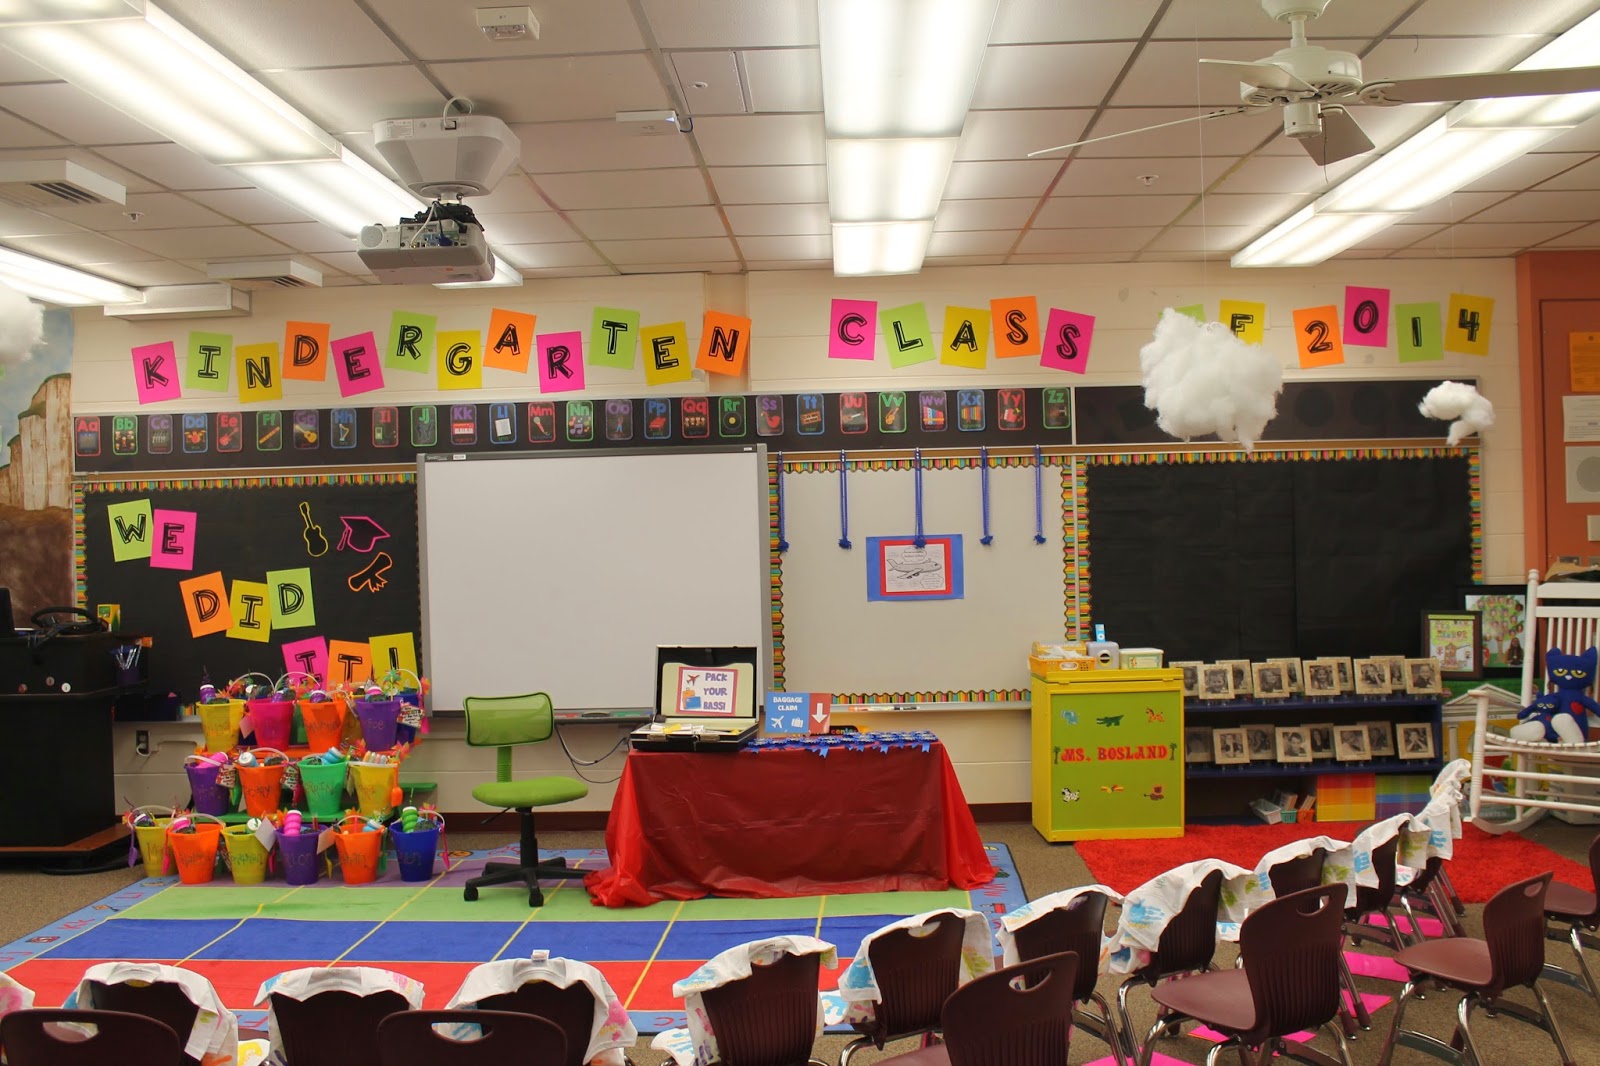 Kindergarten classroom decorated for a graduation ceremony